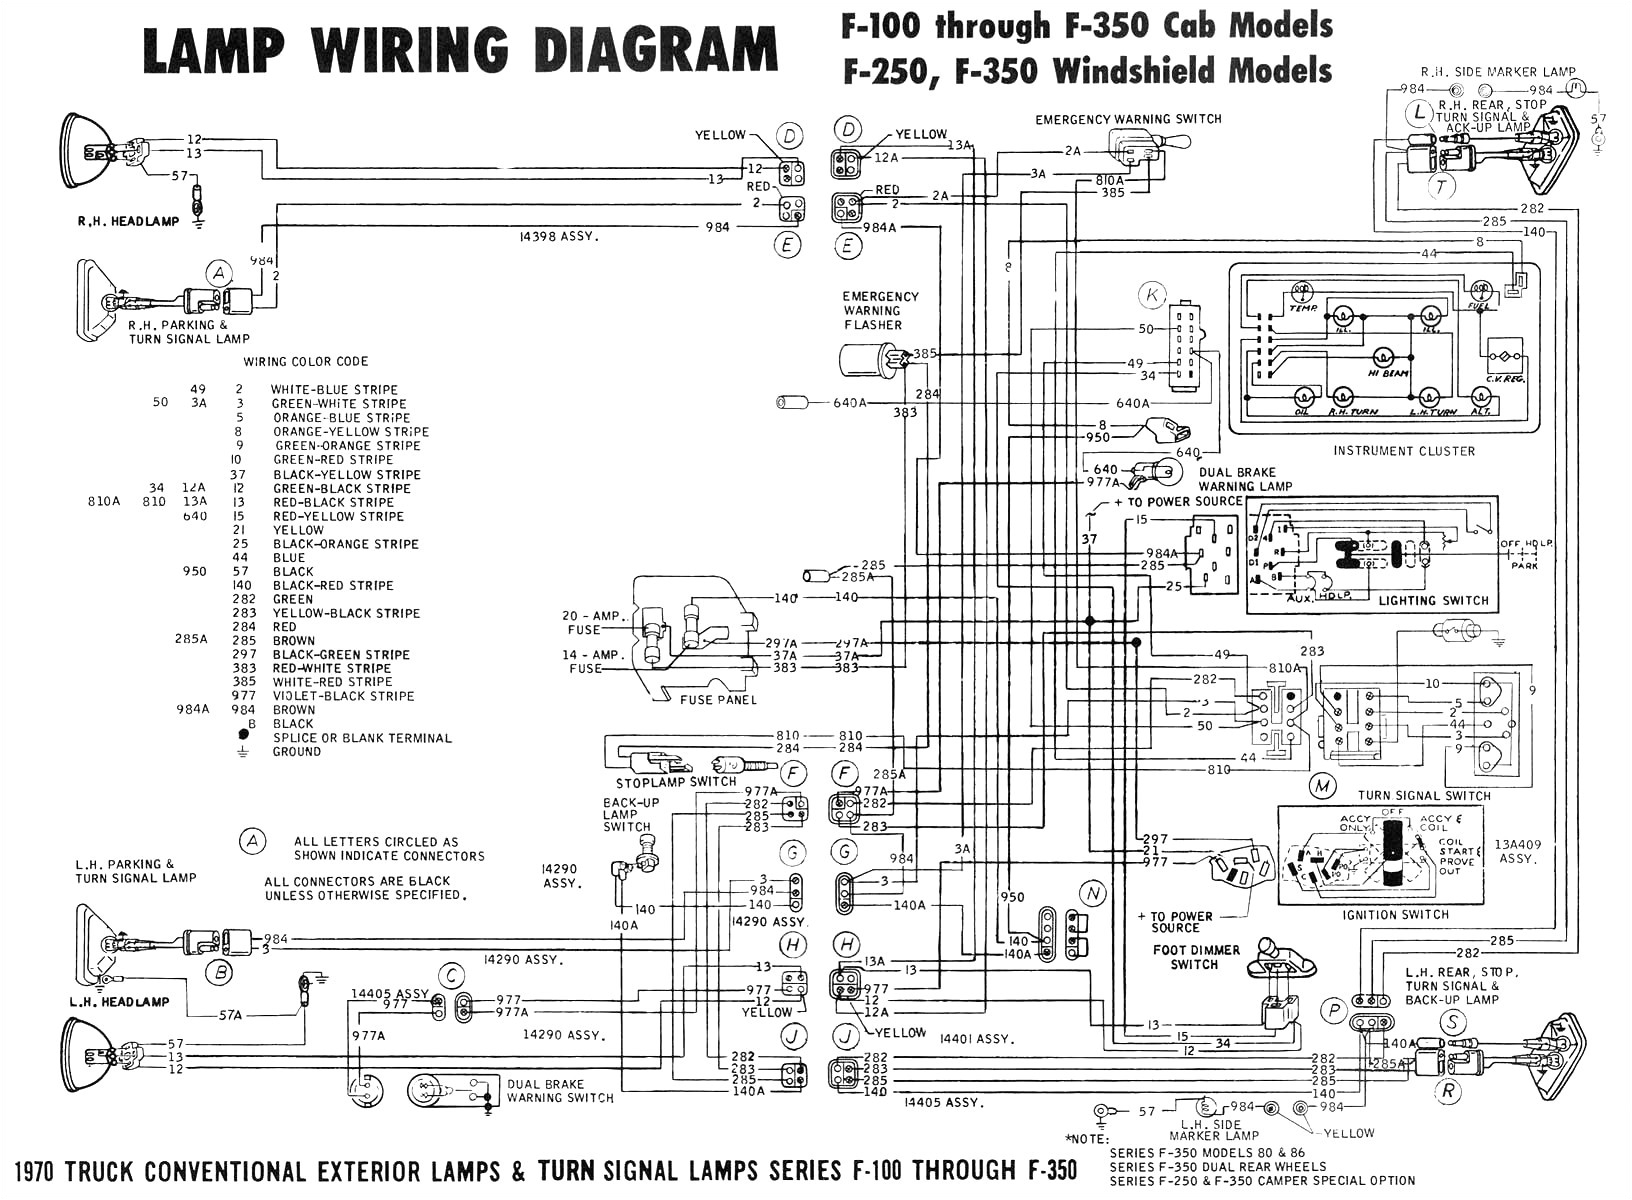 wire harness wir01922 wiring diagram f350 wiring schematics wiring diagram centref350 wiring schematics wiring diagram expertwiring